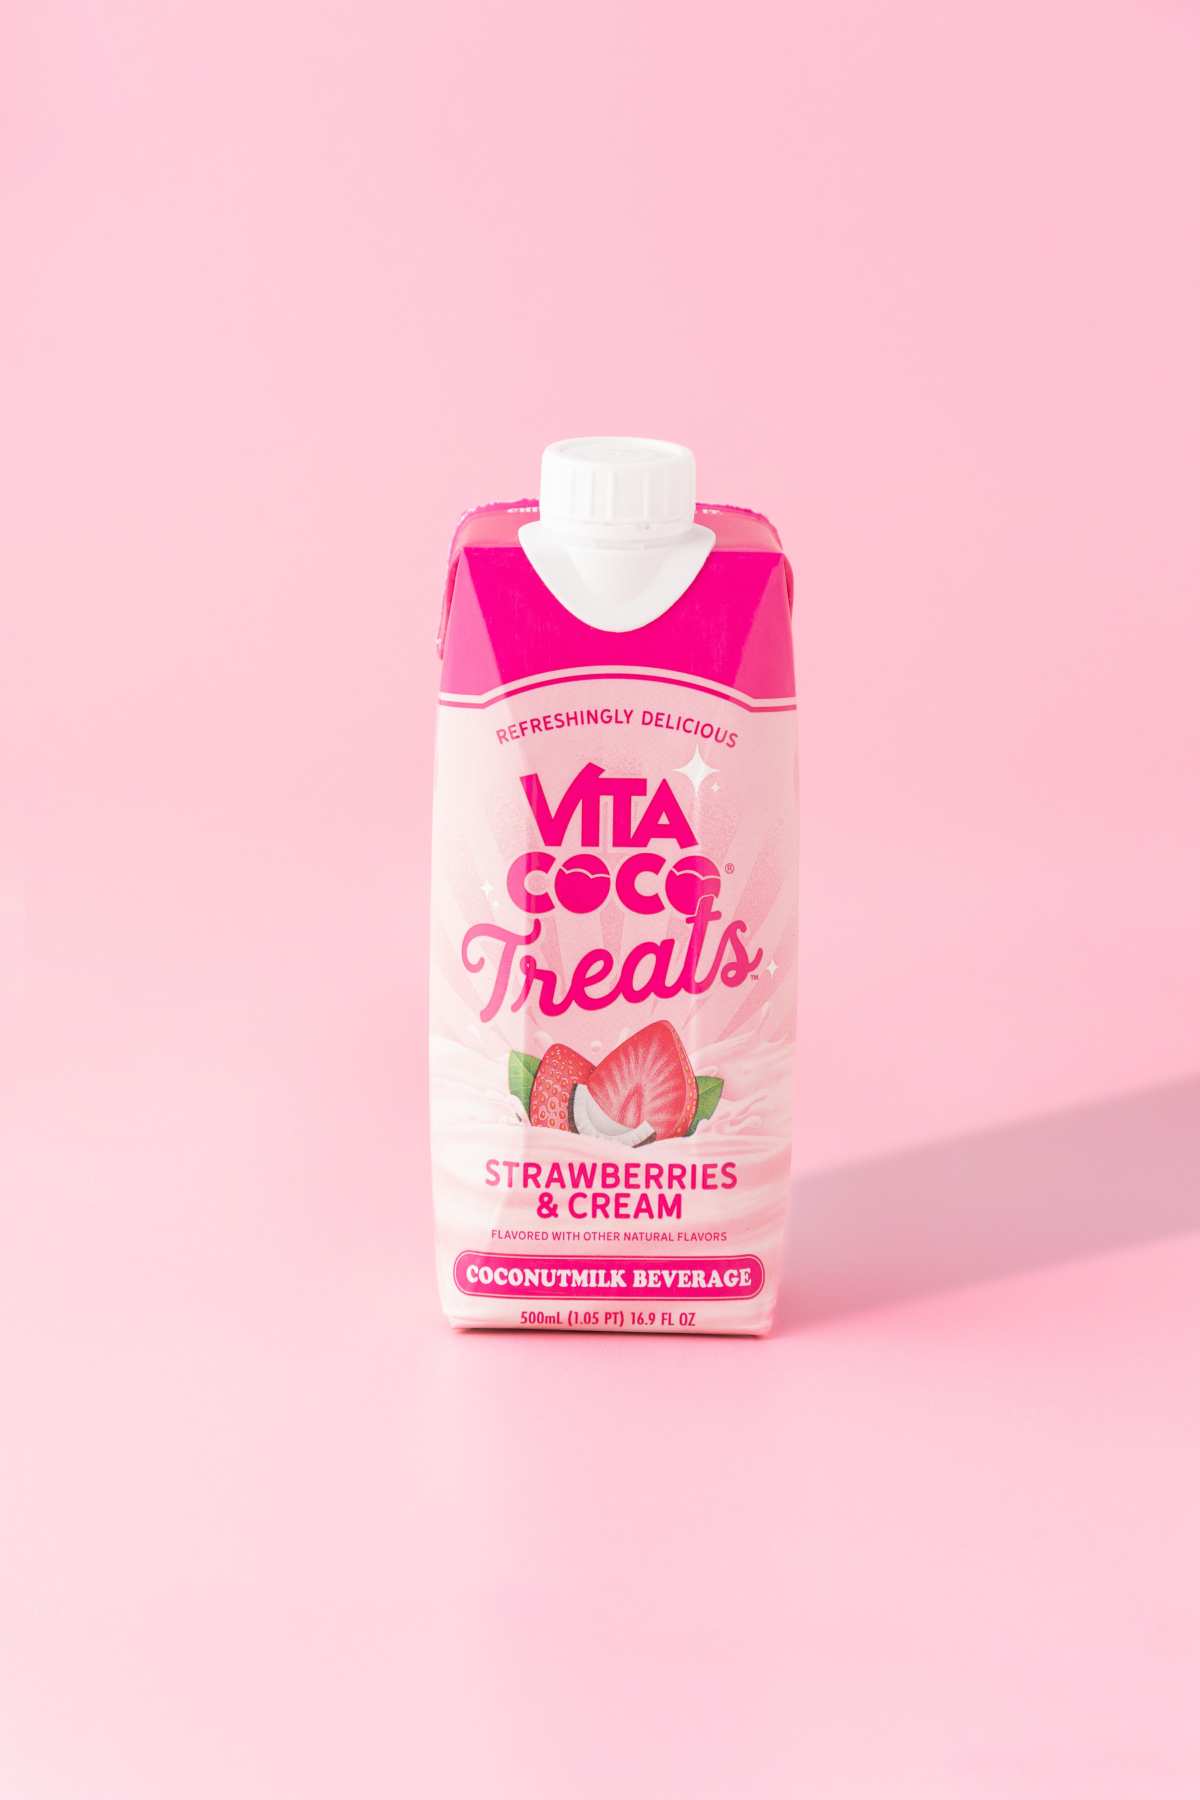 Treat Yourself with Vita Coco Treats